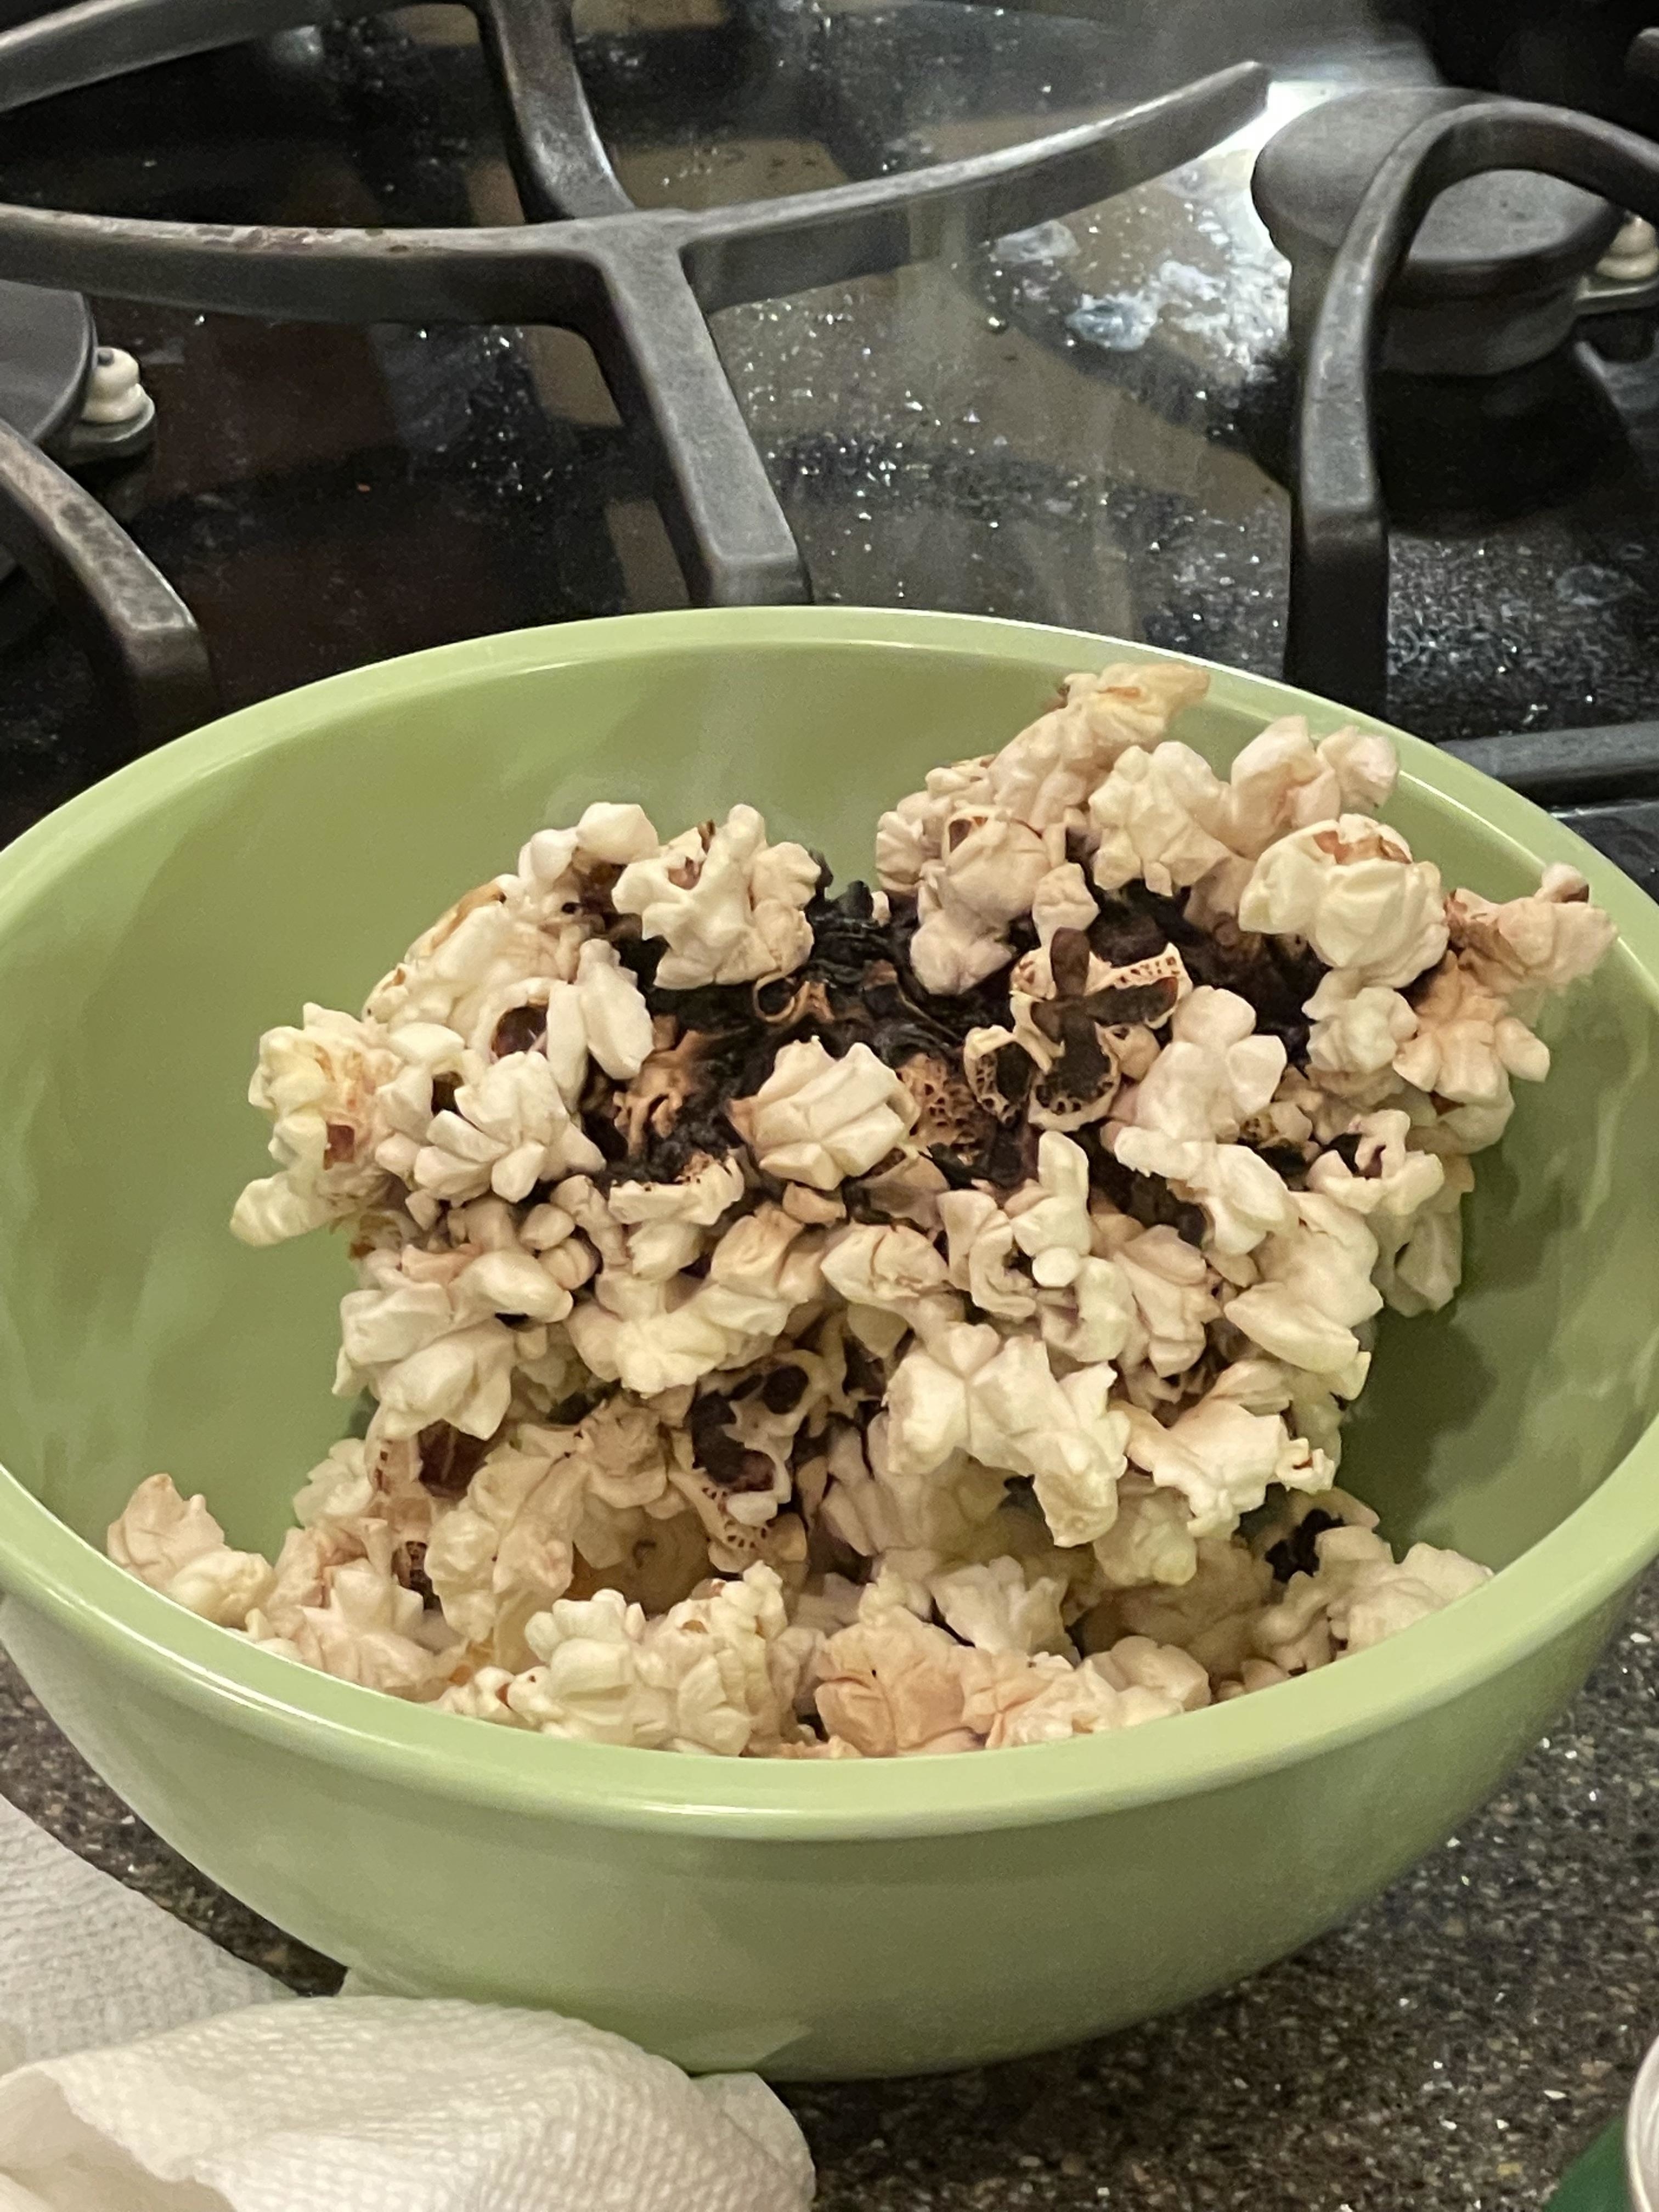 a bowl of burnt popcorn